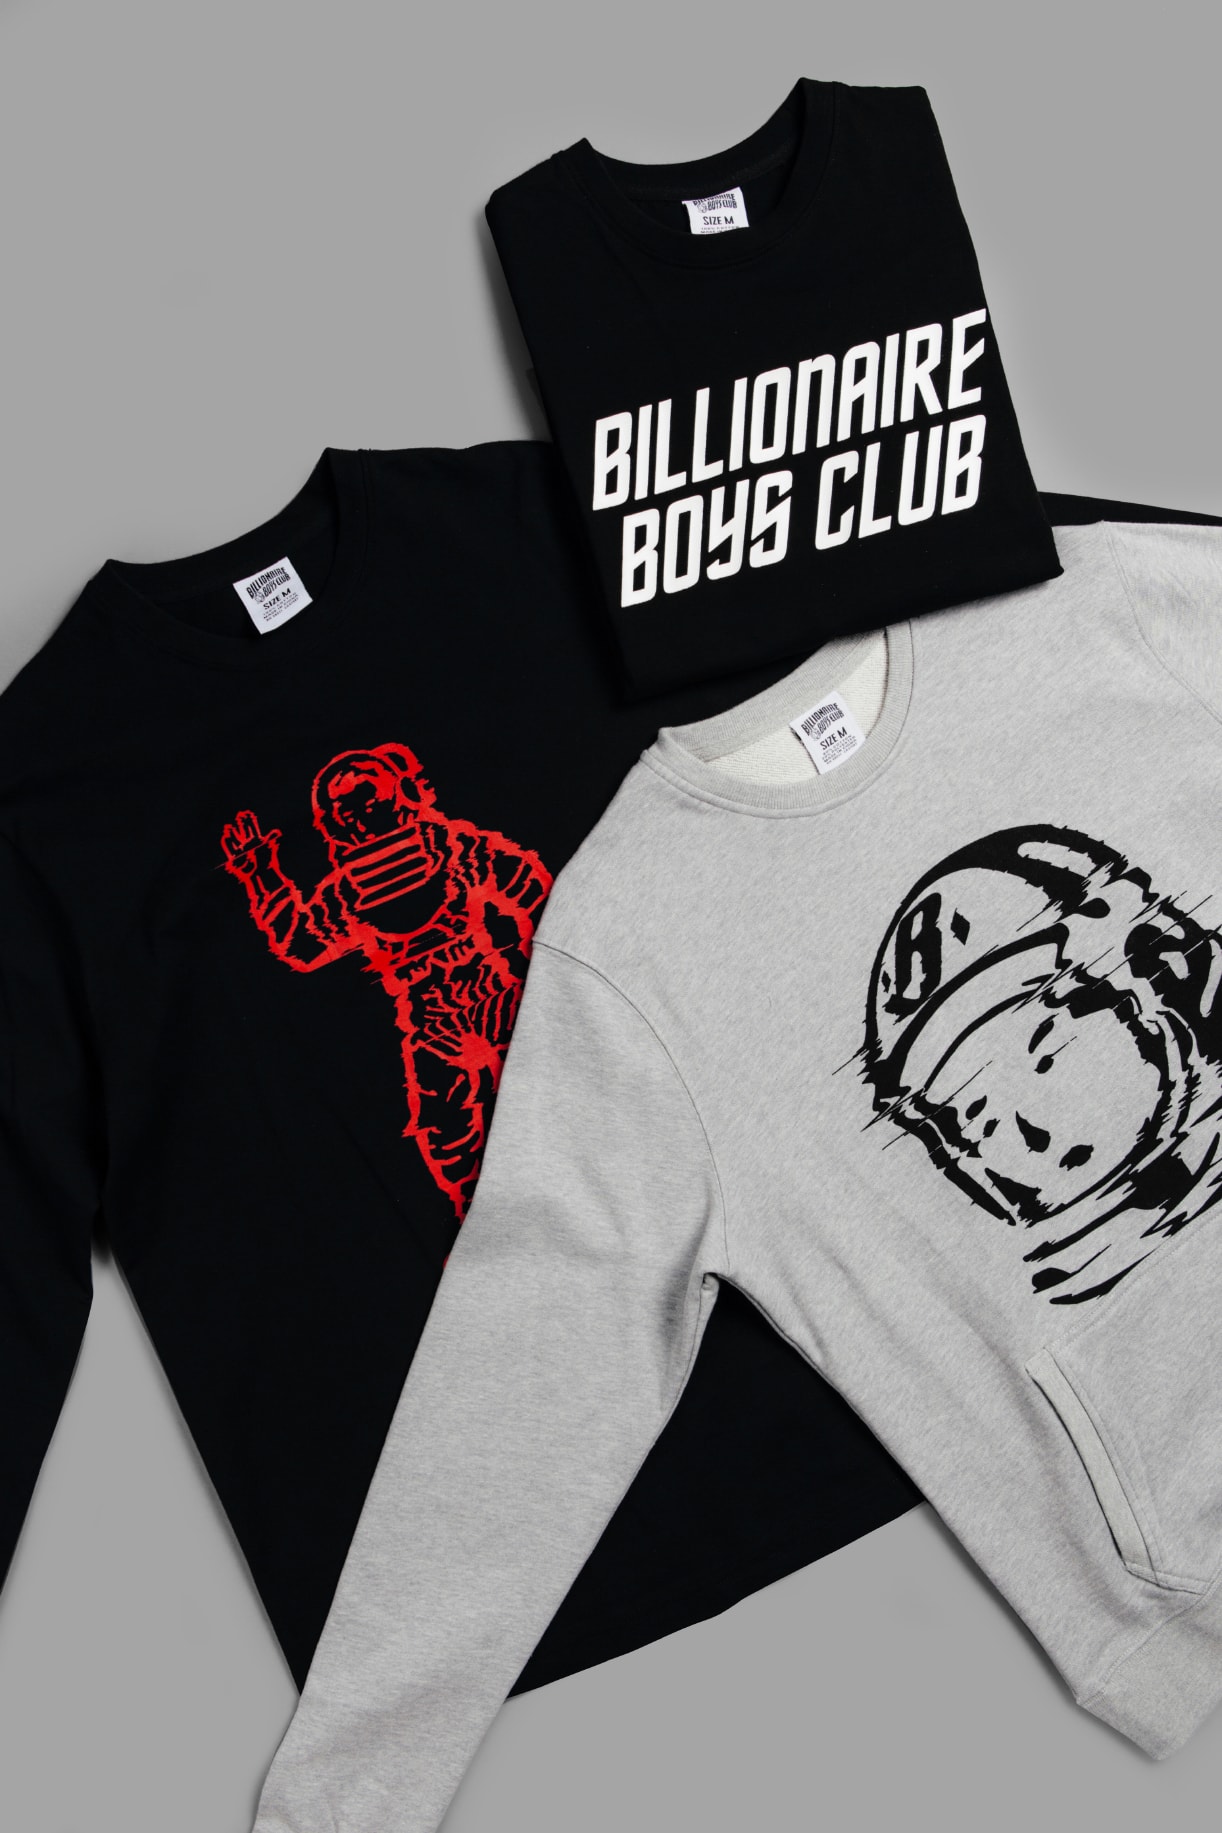 Billionaire Boys Club Fall Winter 2016 Collection